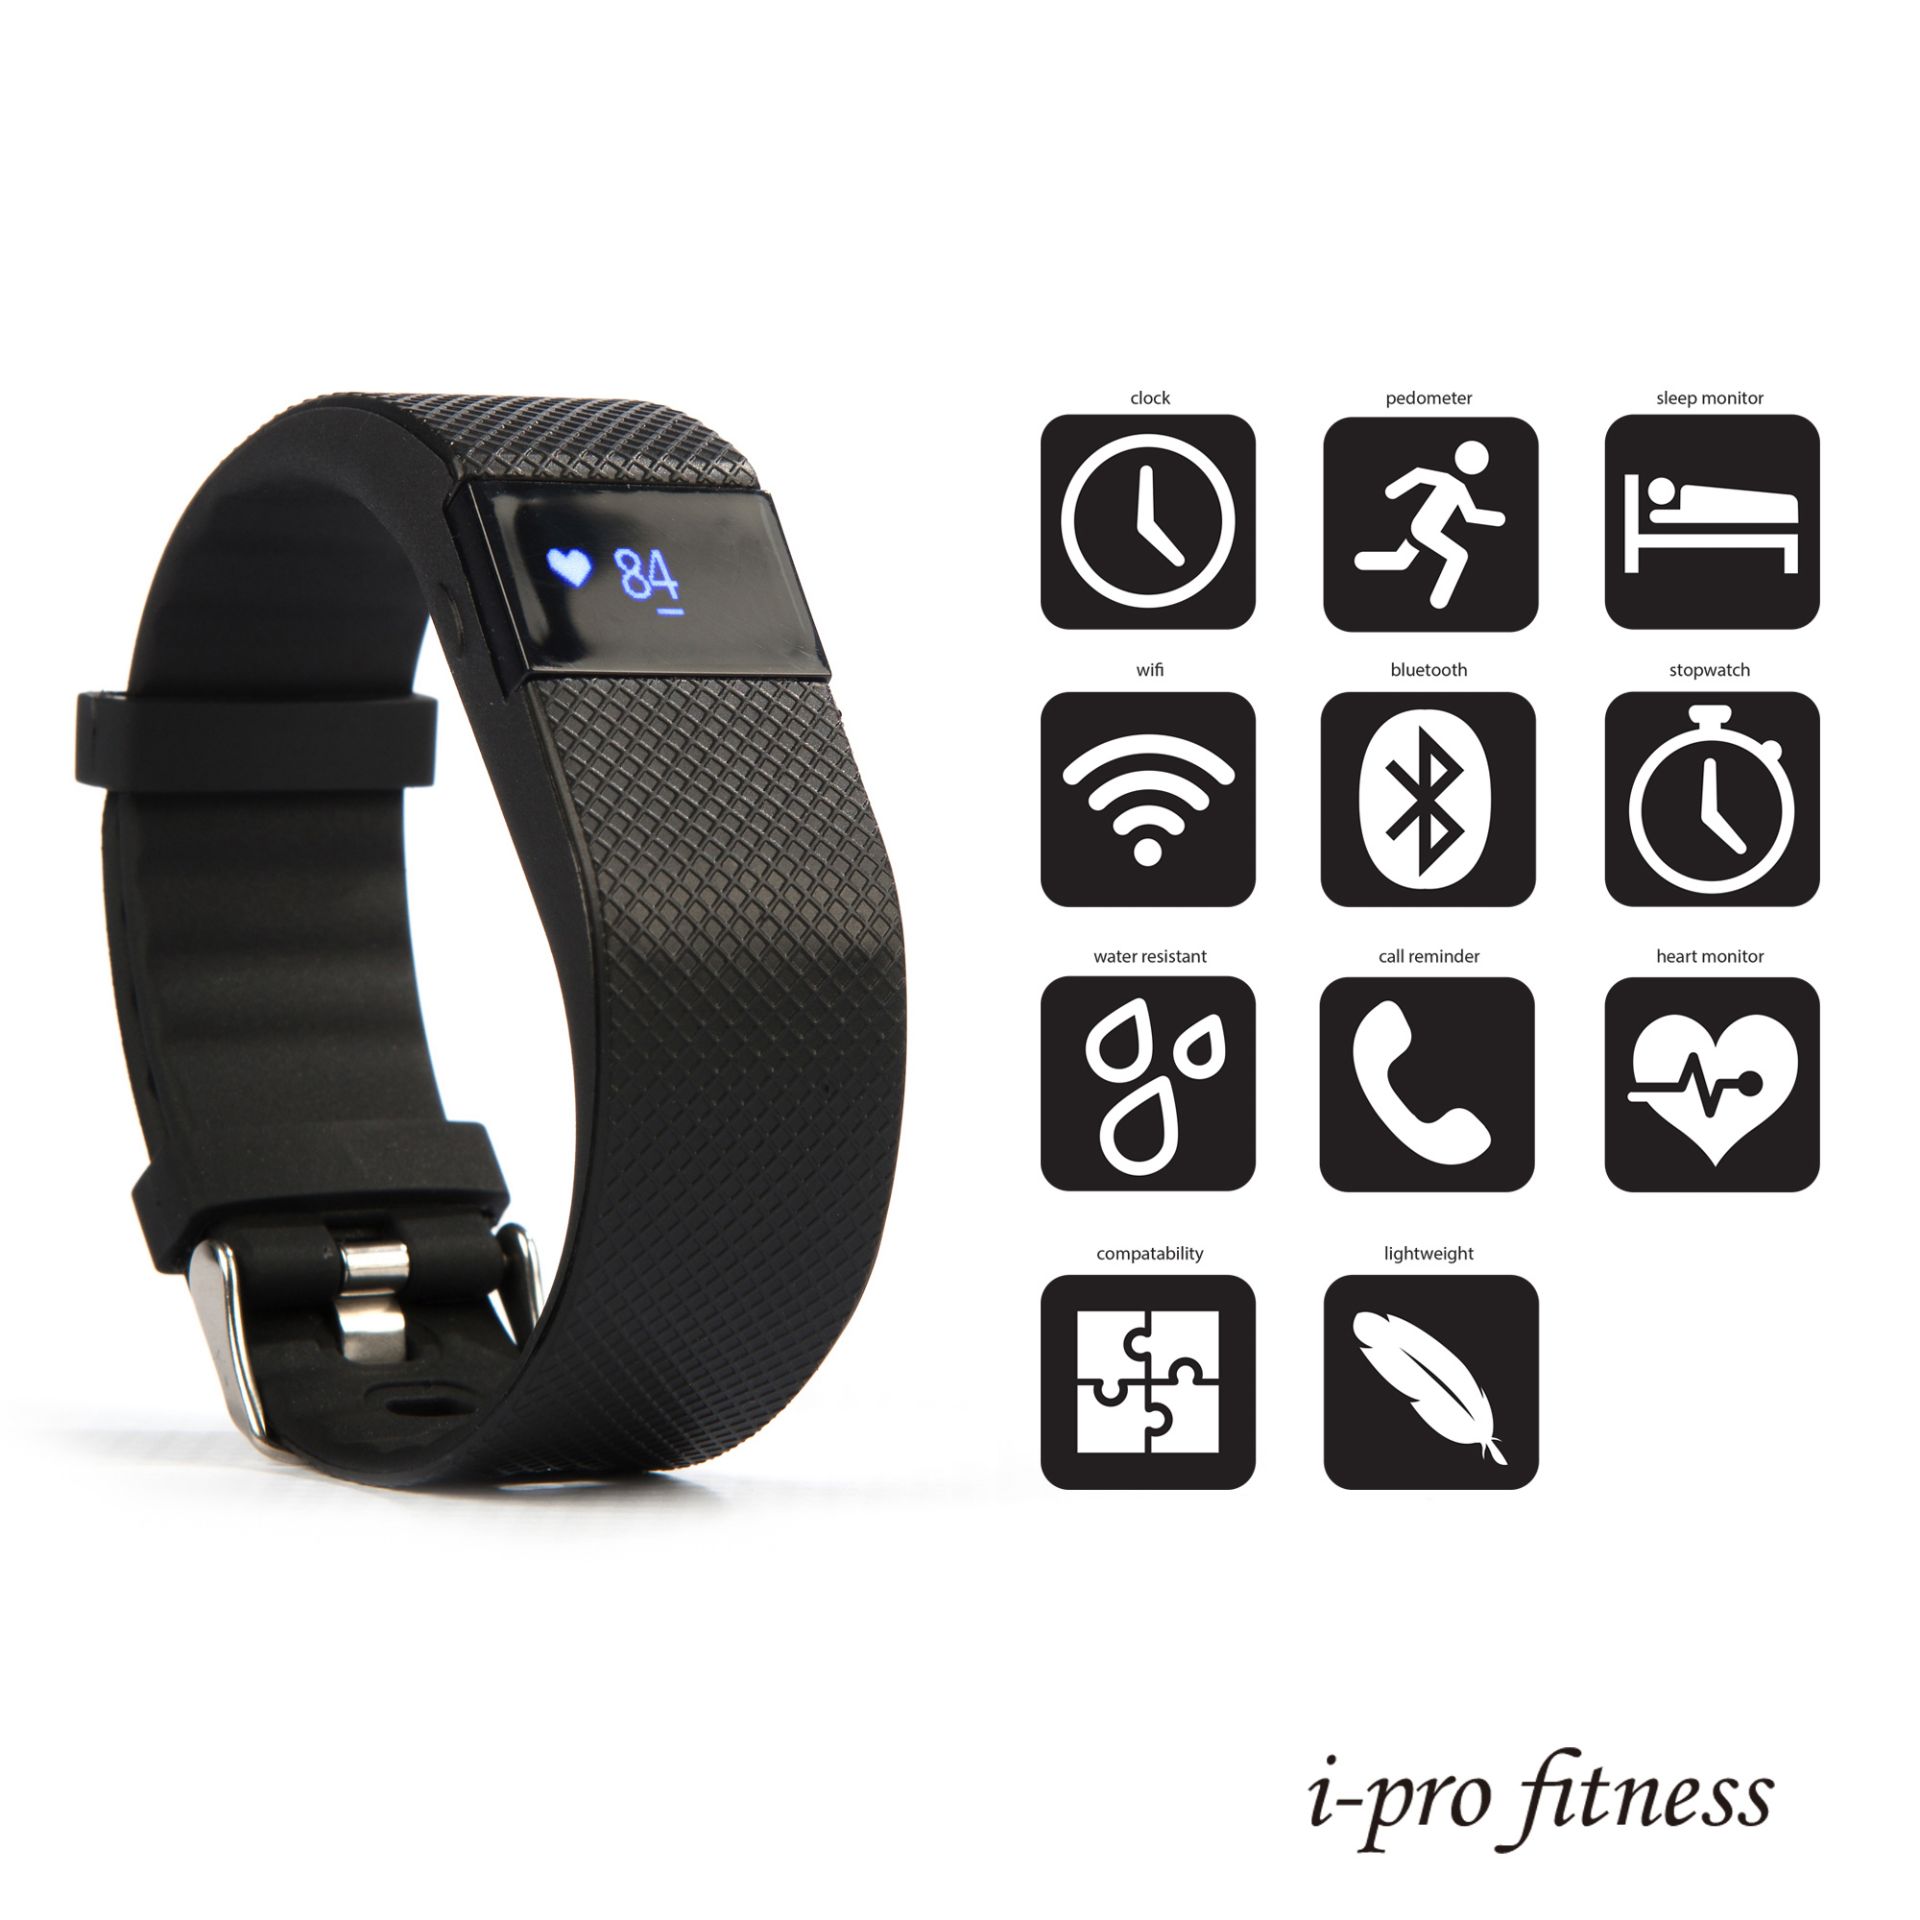 20x Fitness Tracker i-pro fitness, Bluetooth 4.0 Sports Smart Bracelet, Heart Rate Monitor, - Image 5 of 8